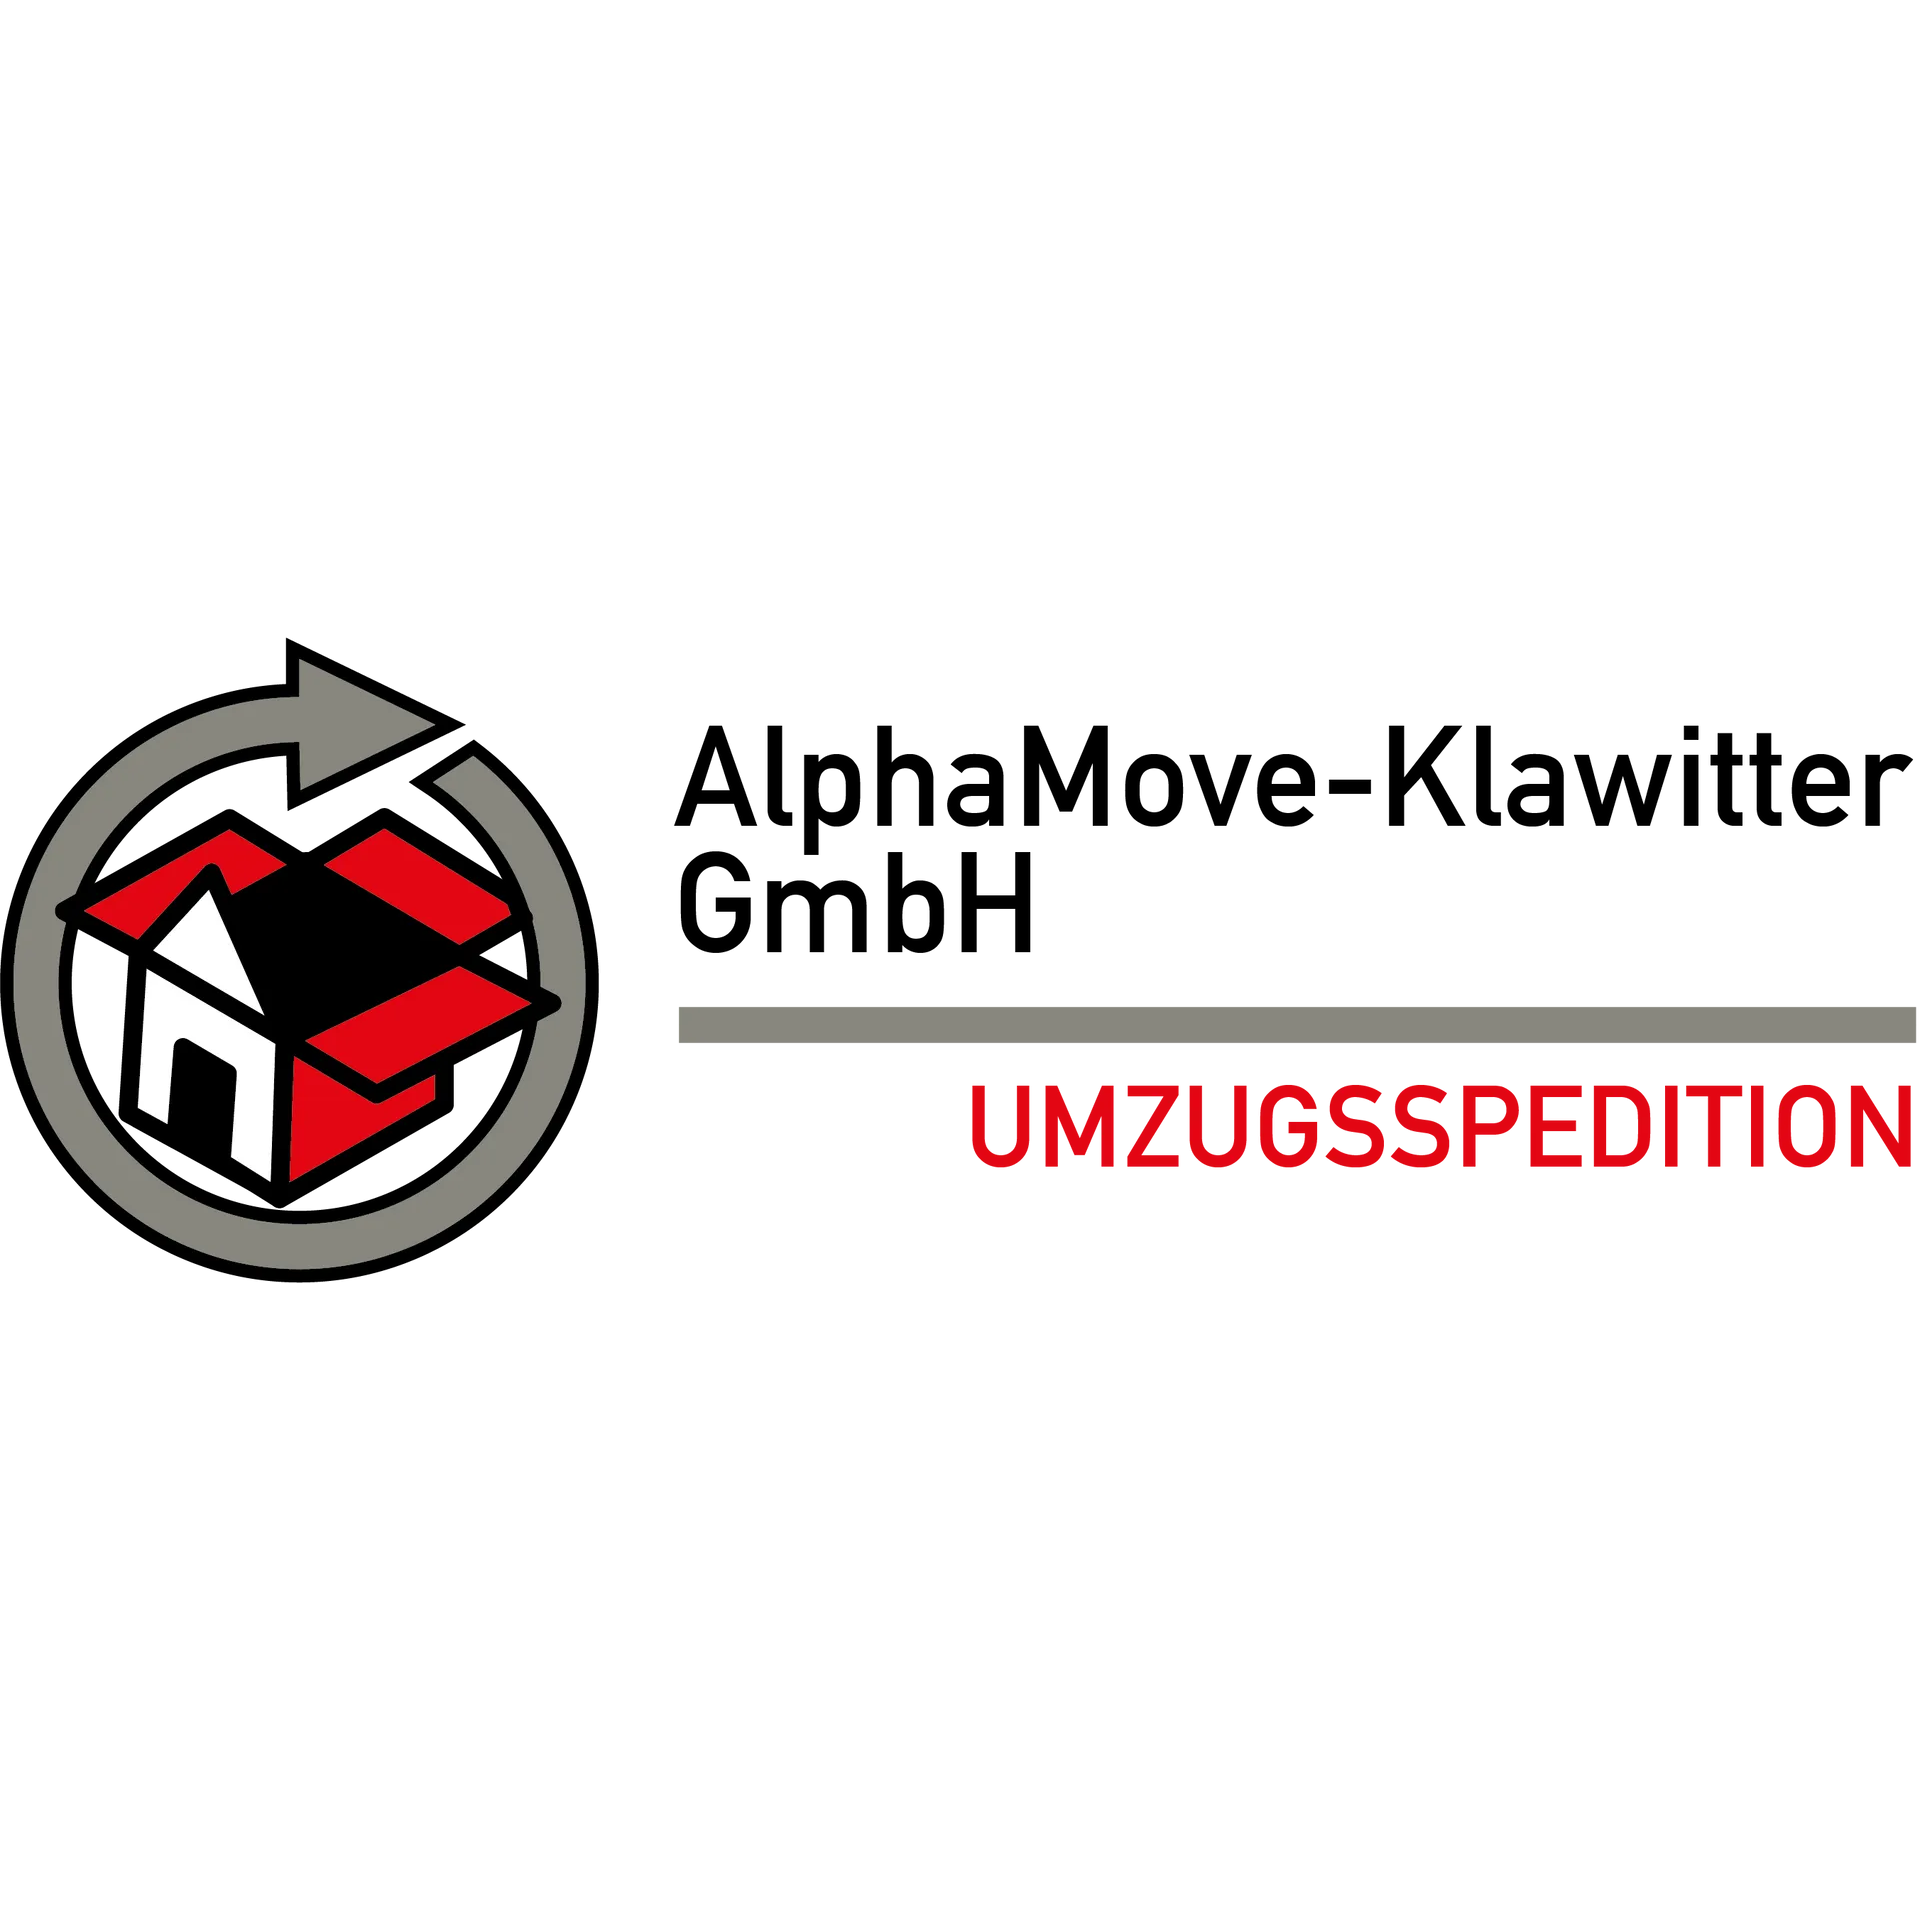 AlphaMove-Klawitter GmbH - Moving Company - Schwerin - 0385 4780823 Germany | ShowMeLocal.com